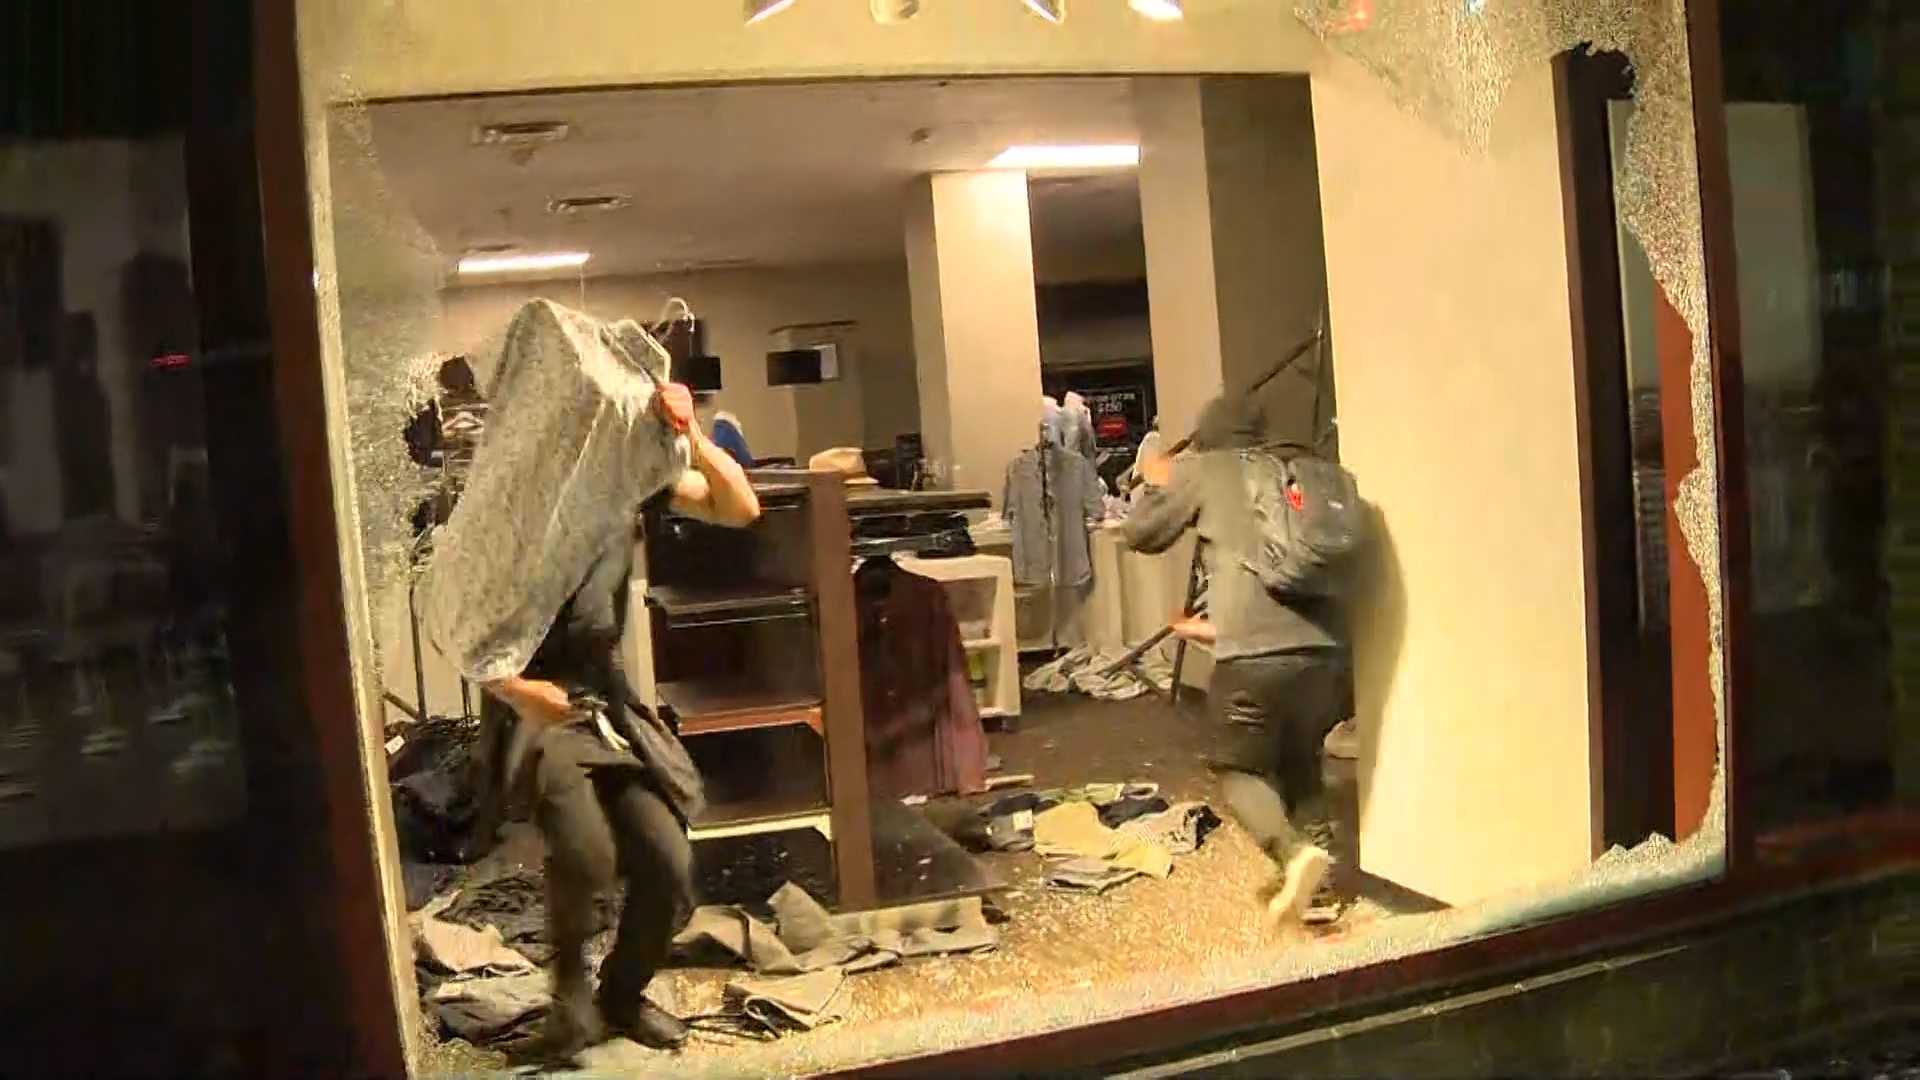 Looters smash several Boston 